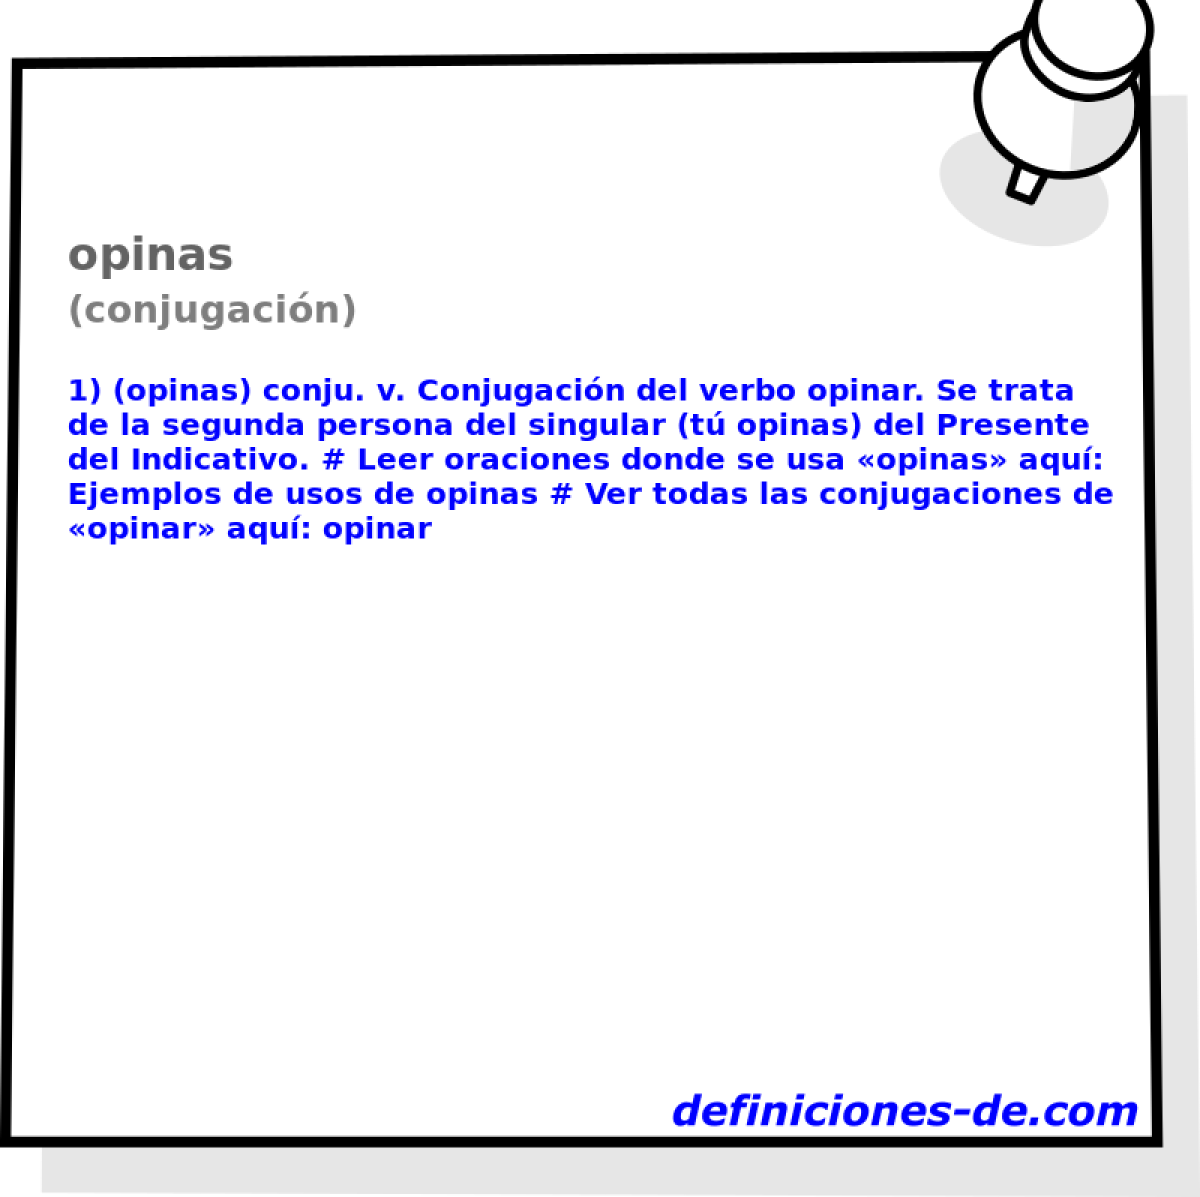 opinas (conjugacin)